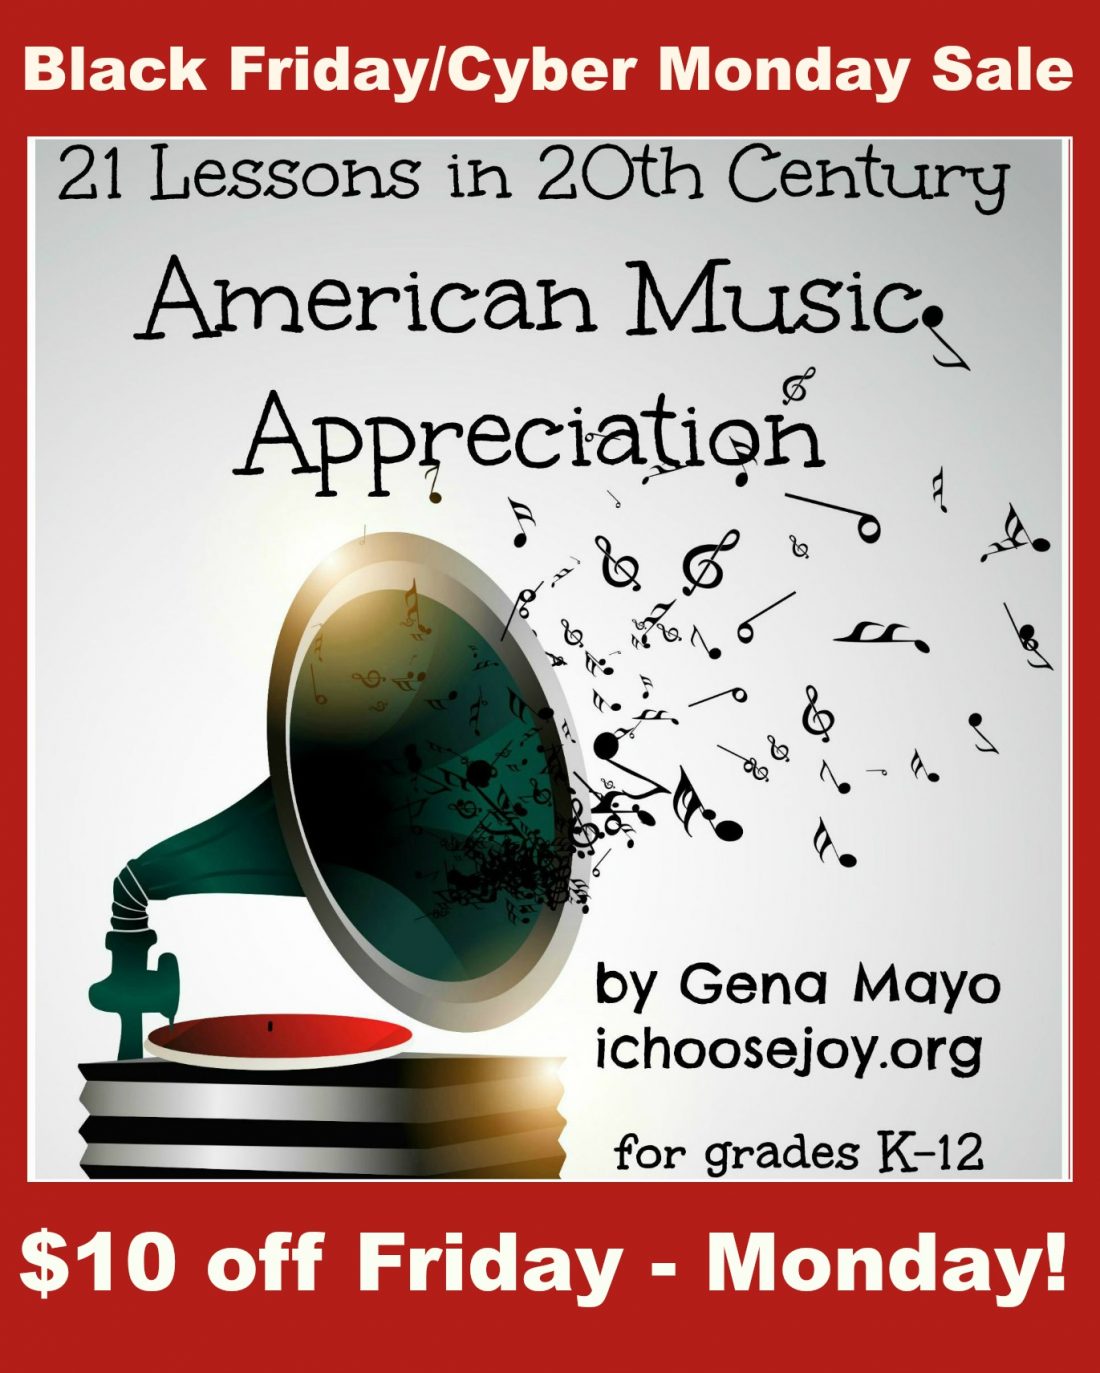 Get $10 off 20th Century American Music Curriculum!